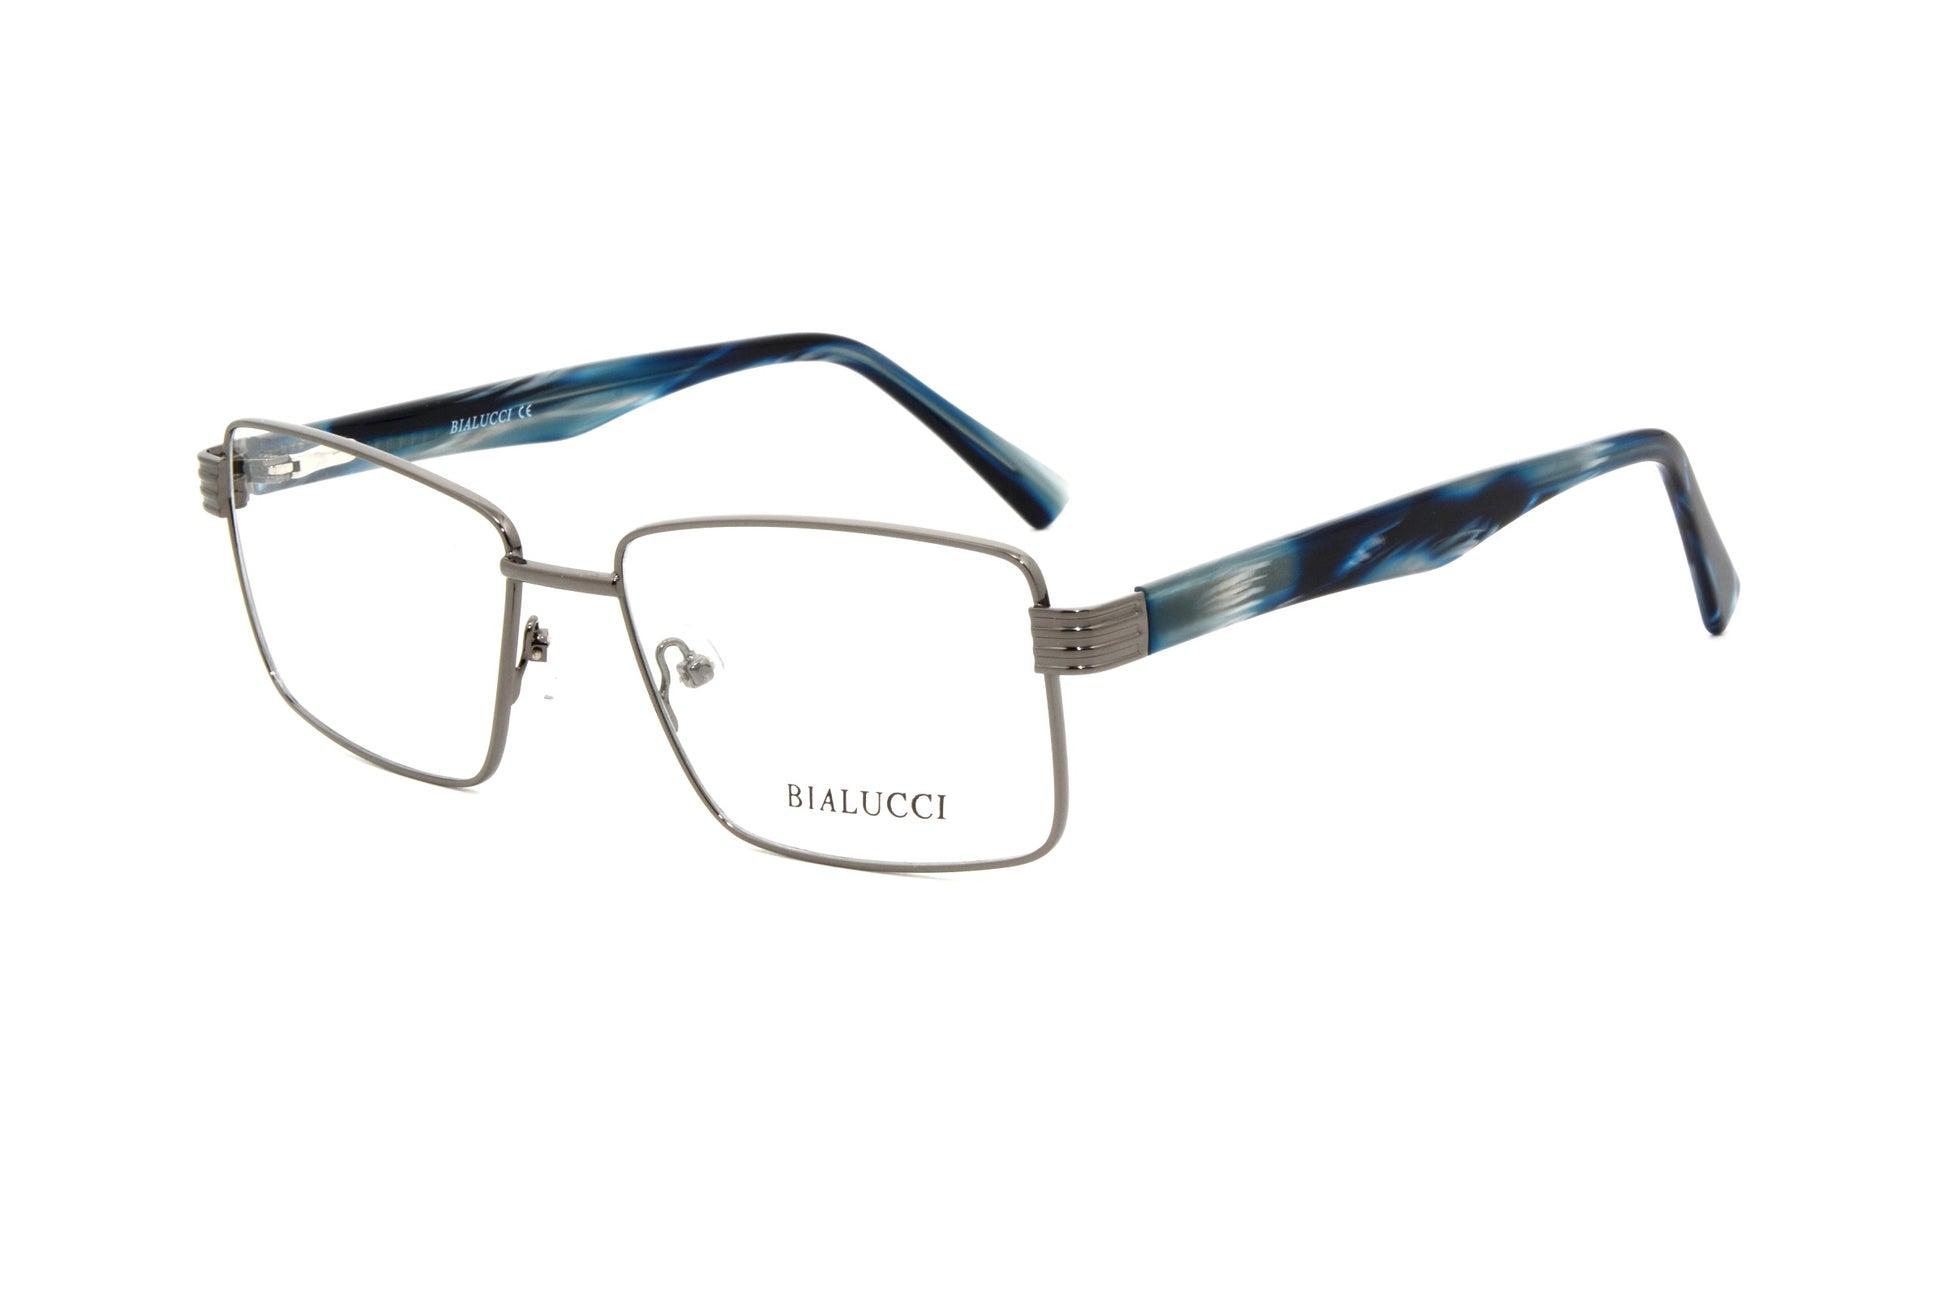 Bialucci eyewear LE 6141 C2